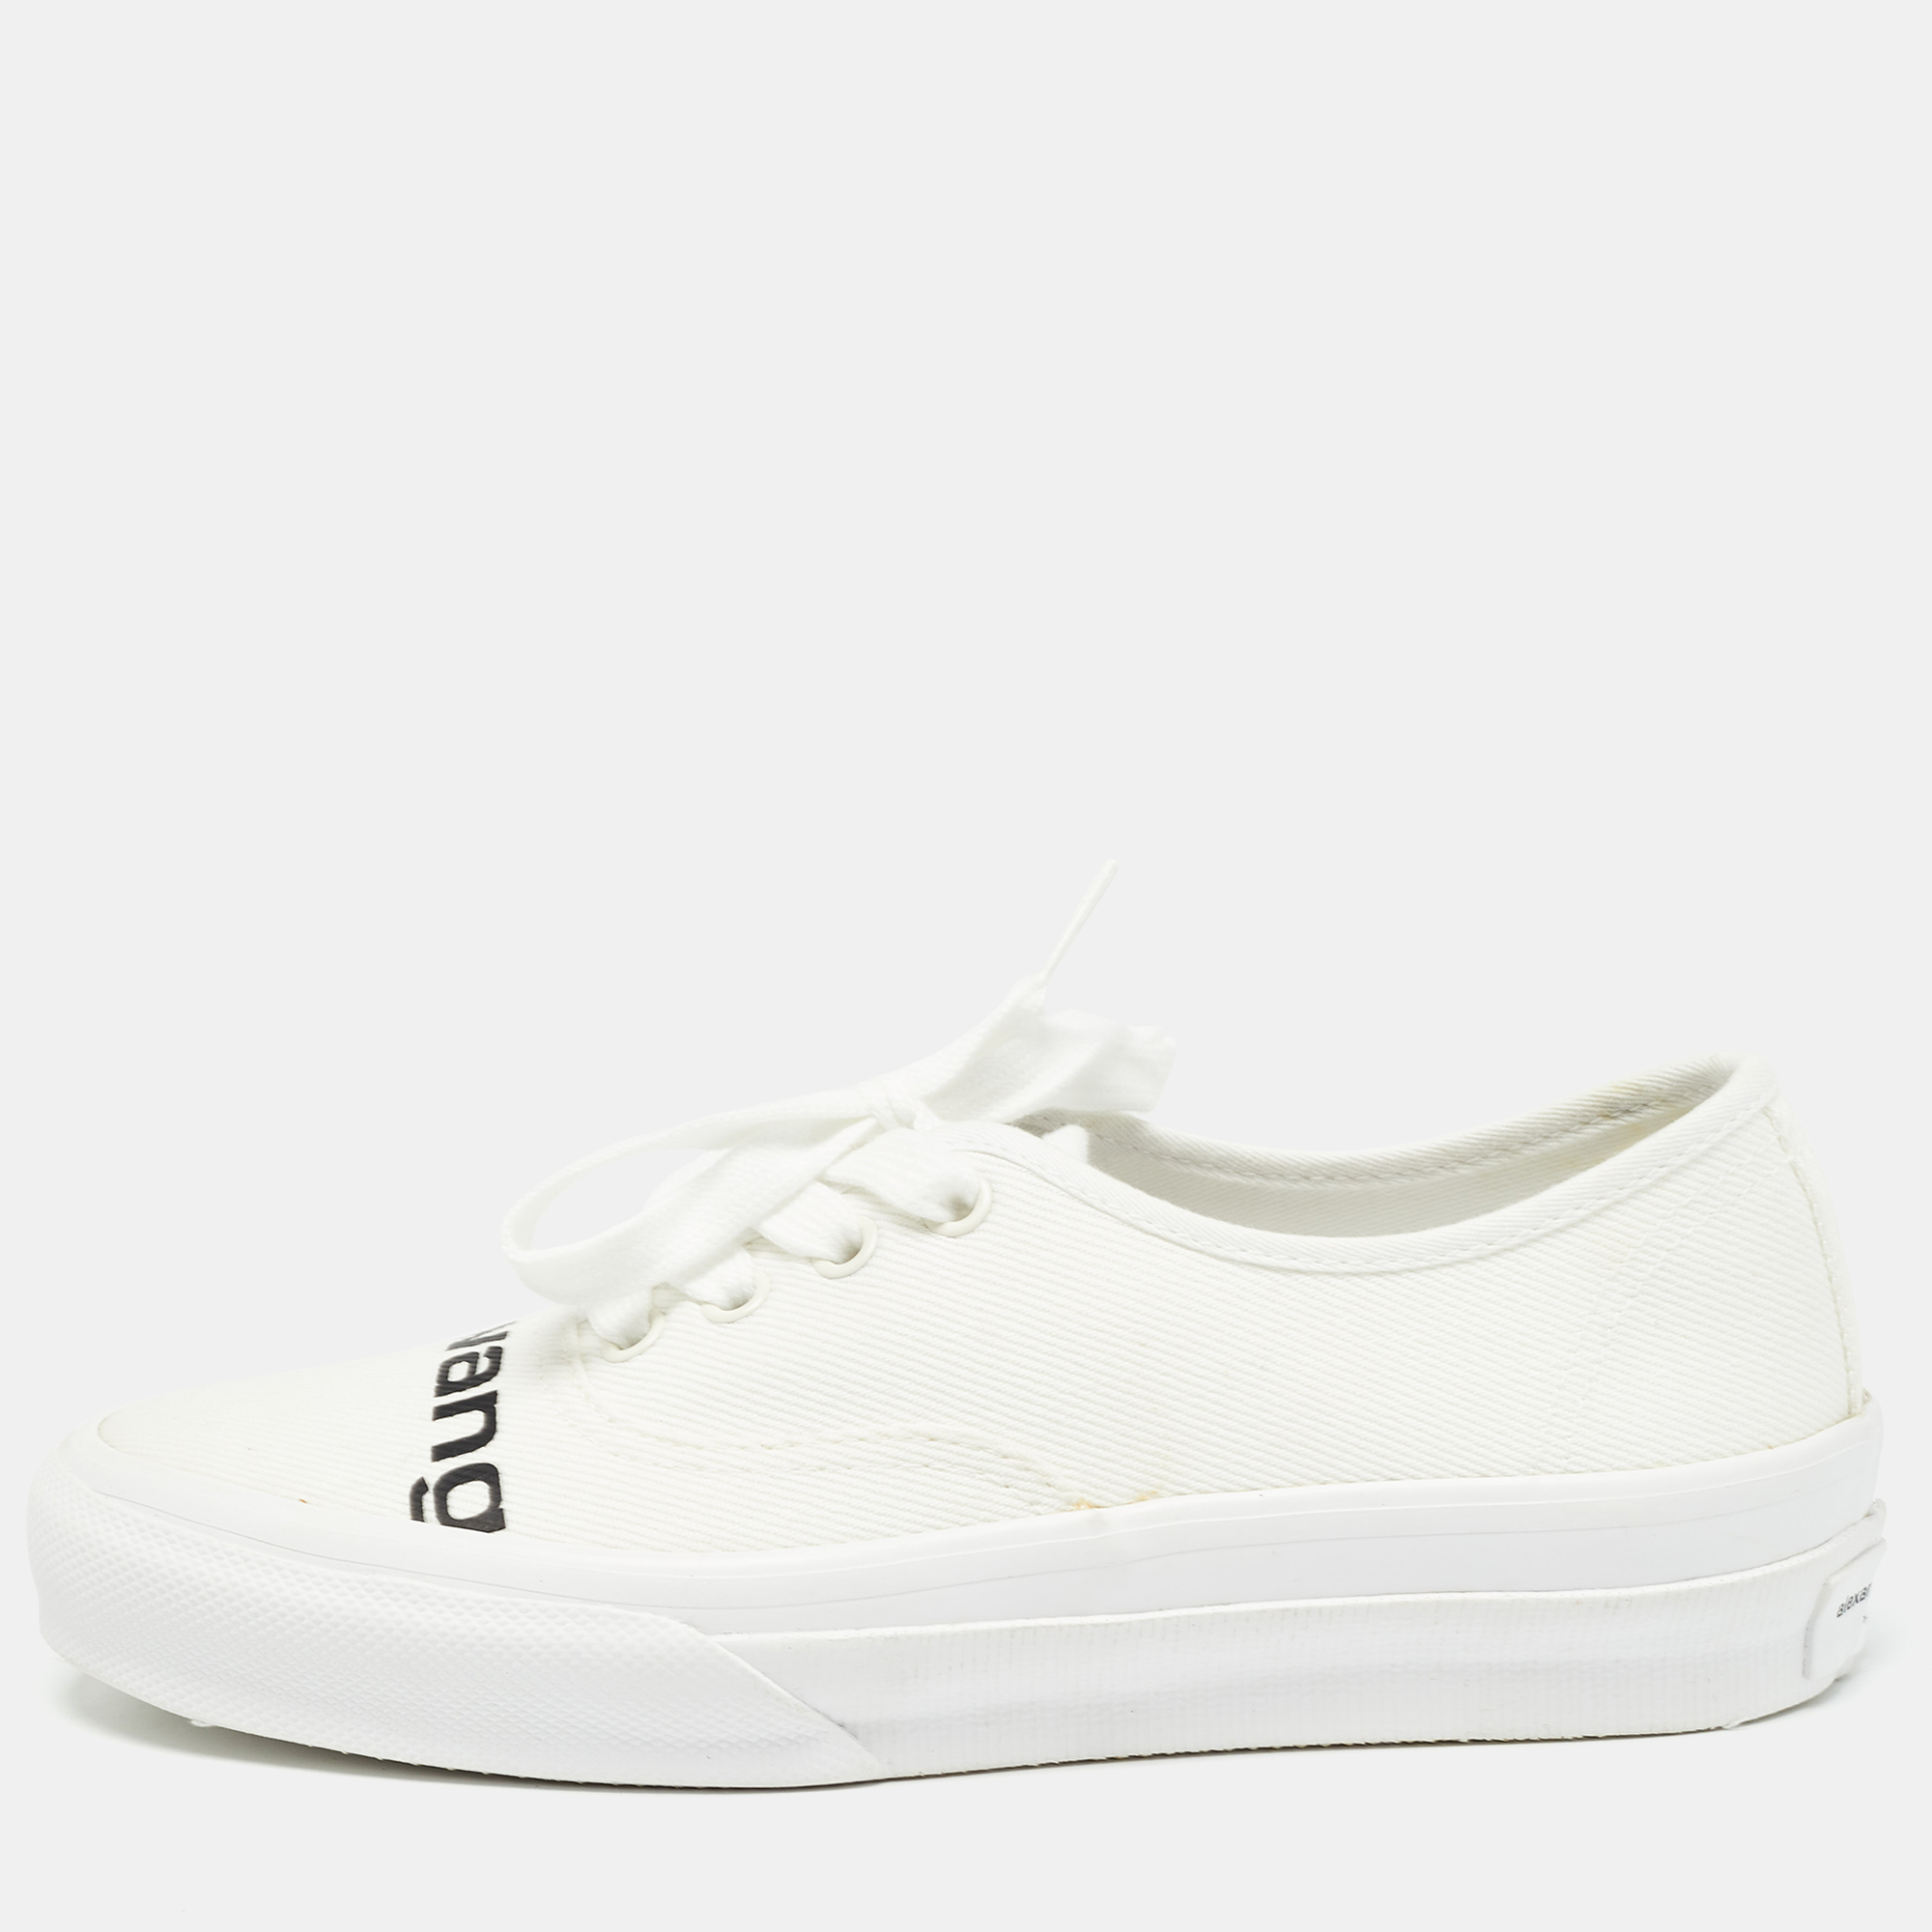 Alexander wang white canvas dropout sneakers size 37.5